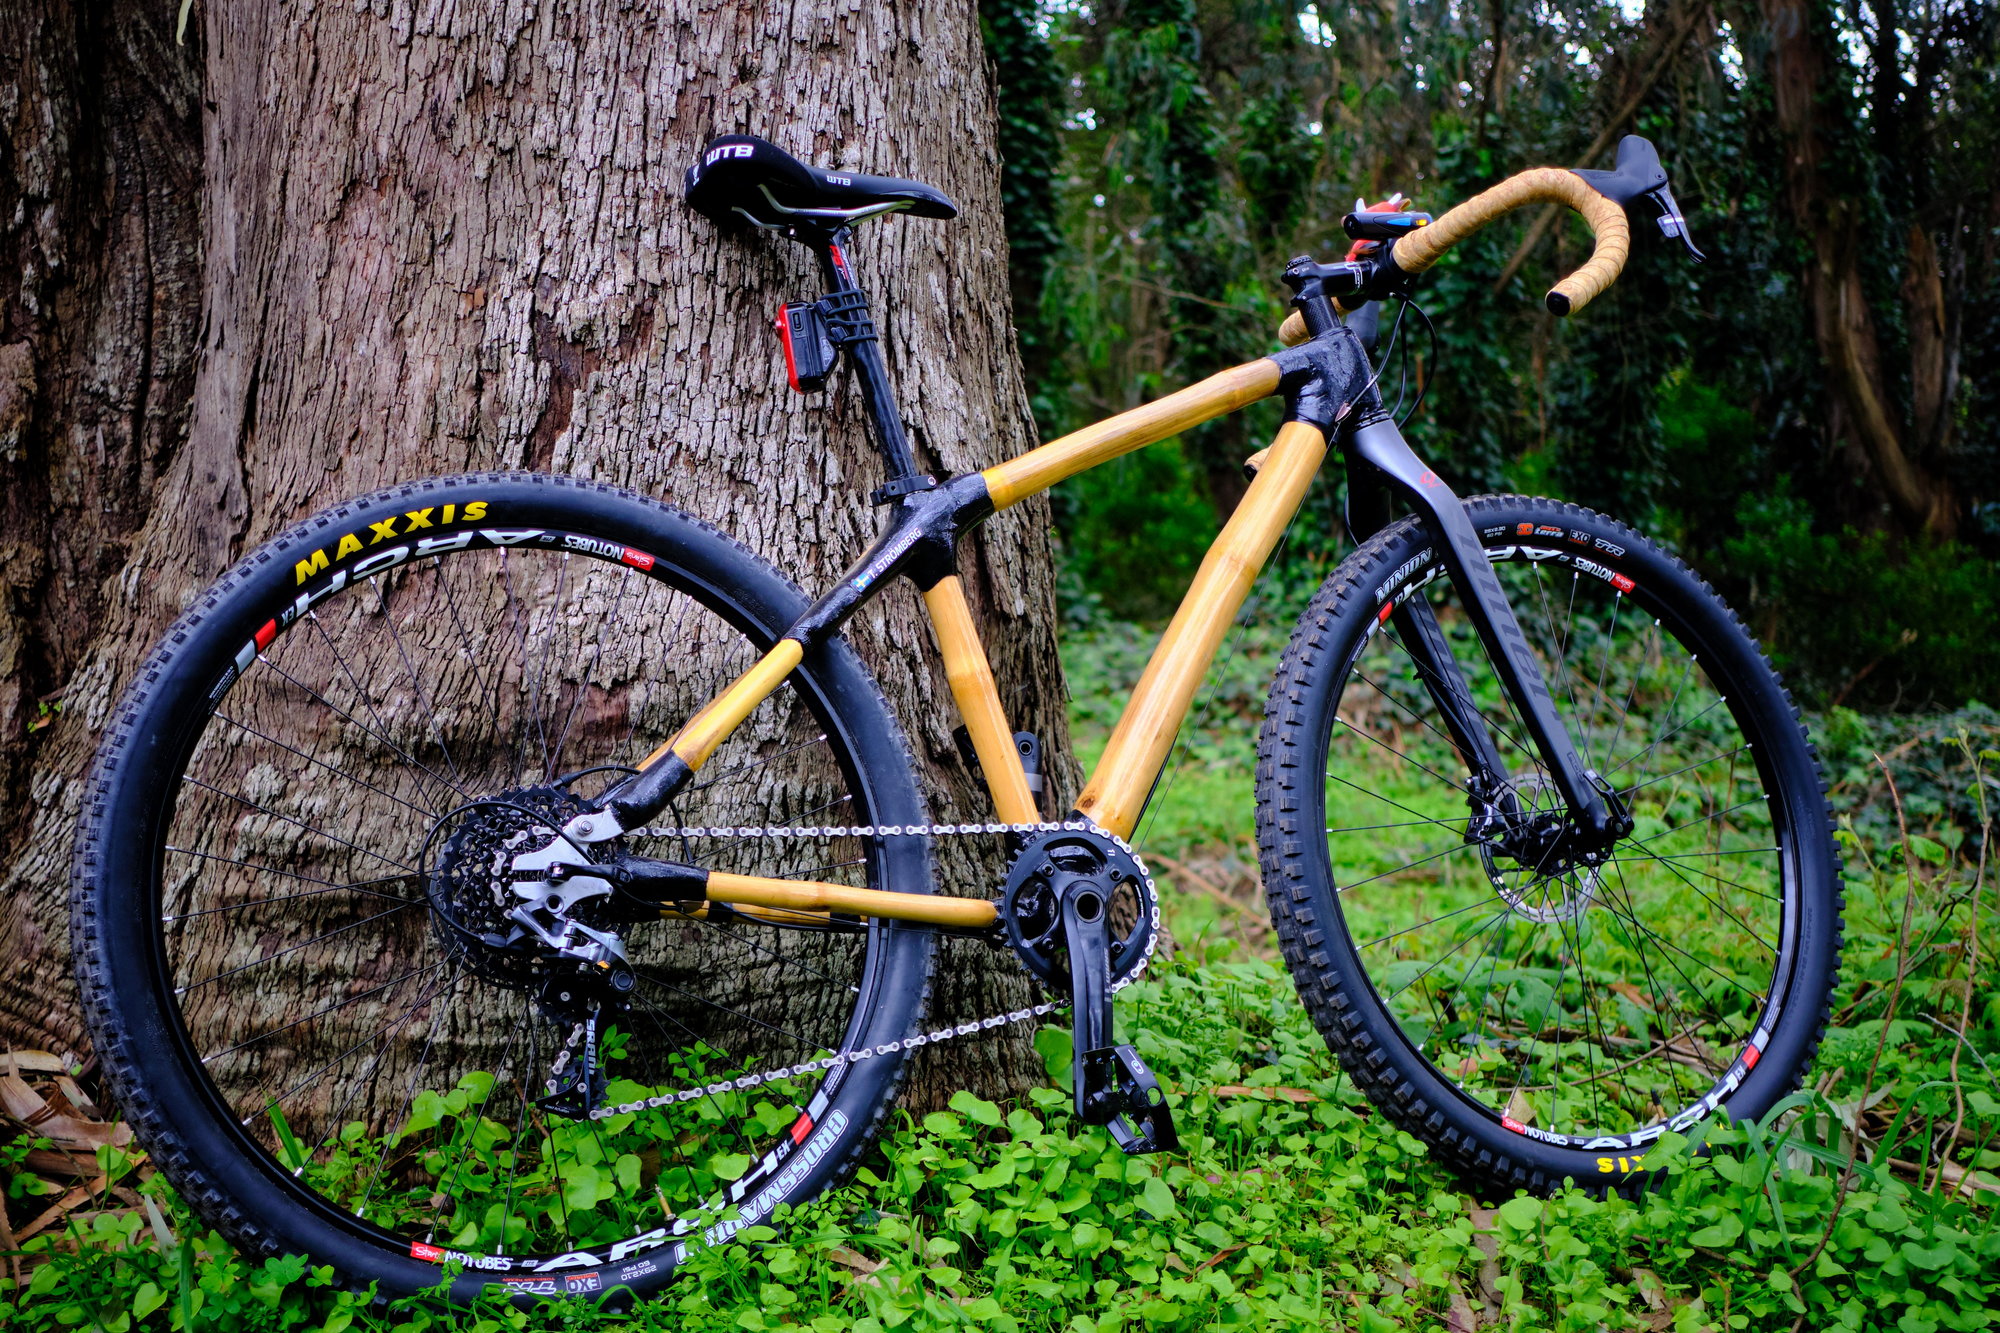 Build thread: Calfee DIY bamboo kit - Page 3 - Bike Forums